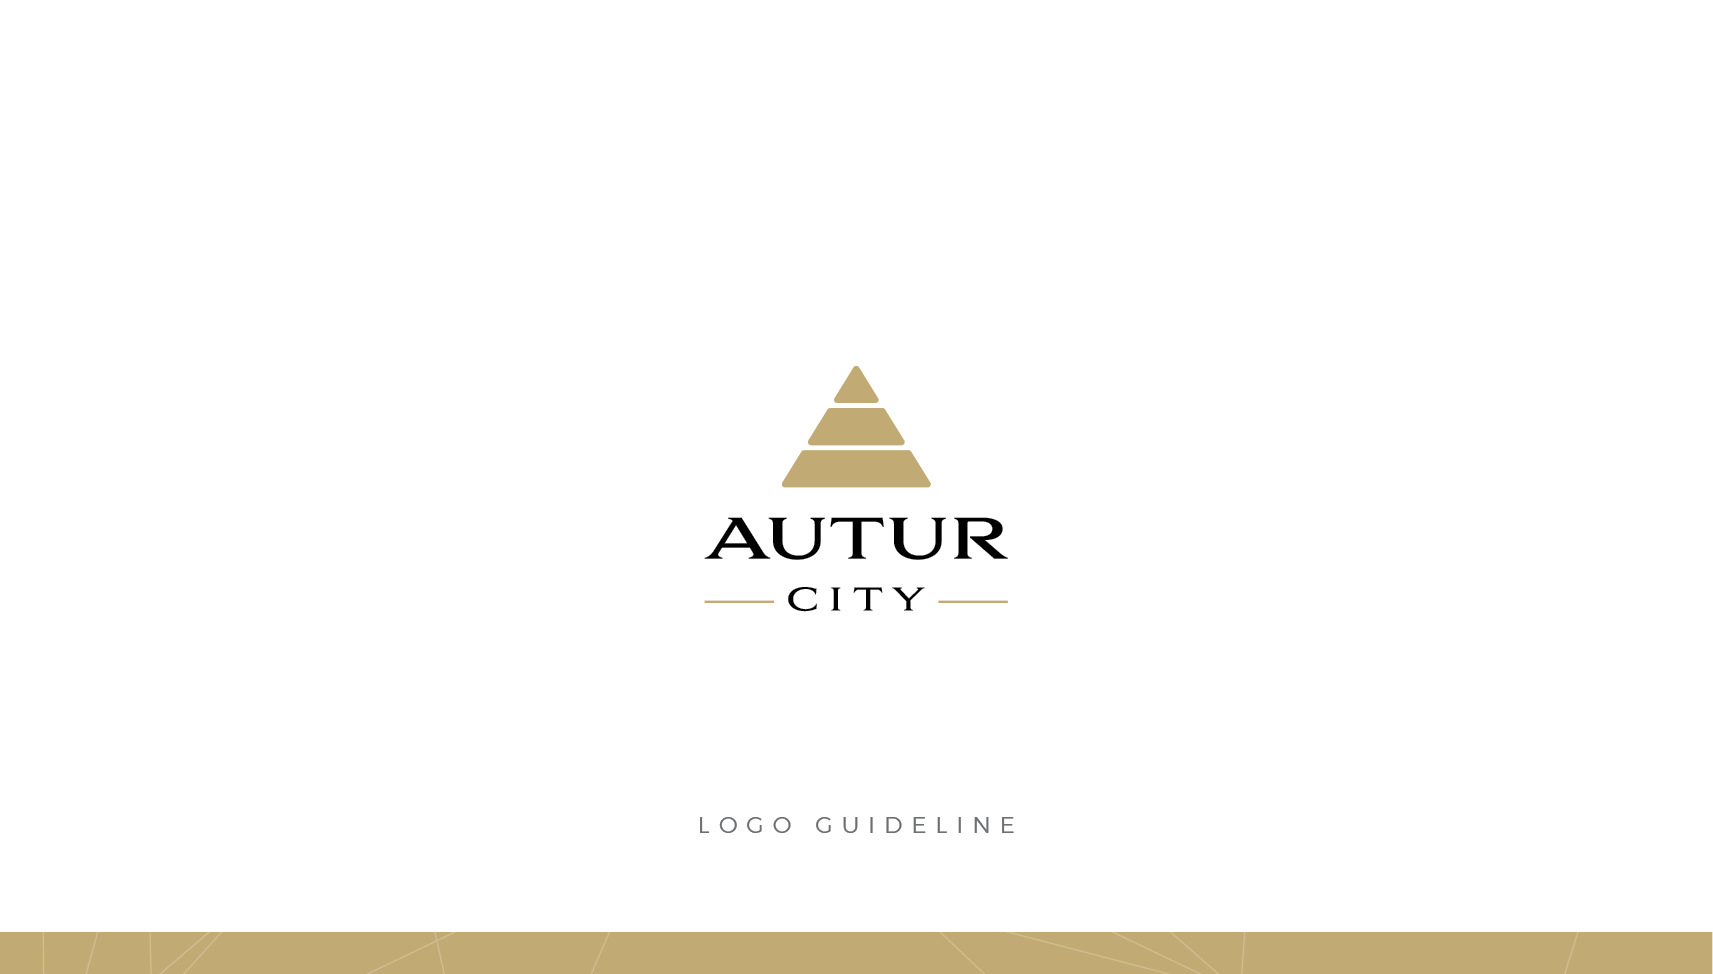 Autut City Brand Guideline